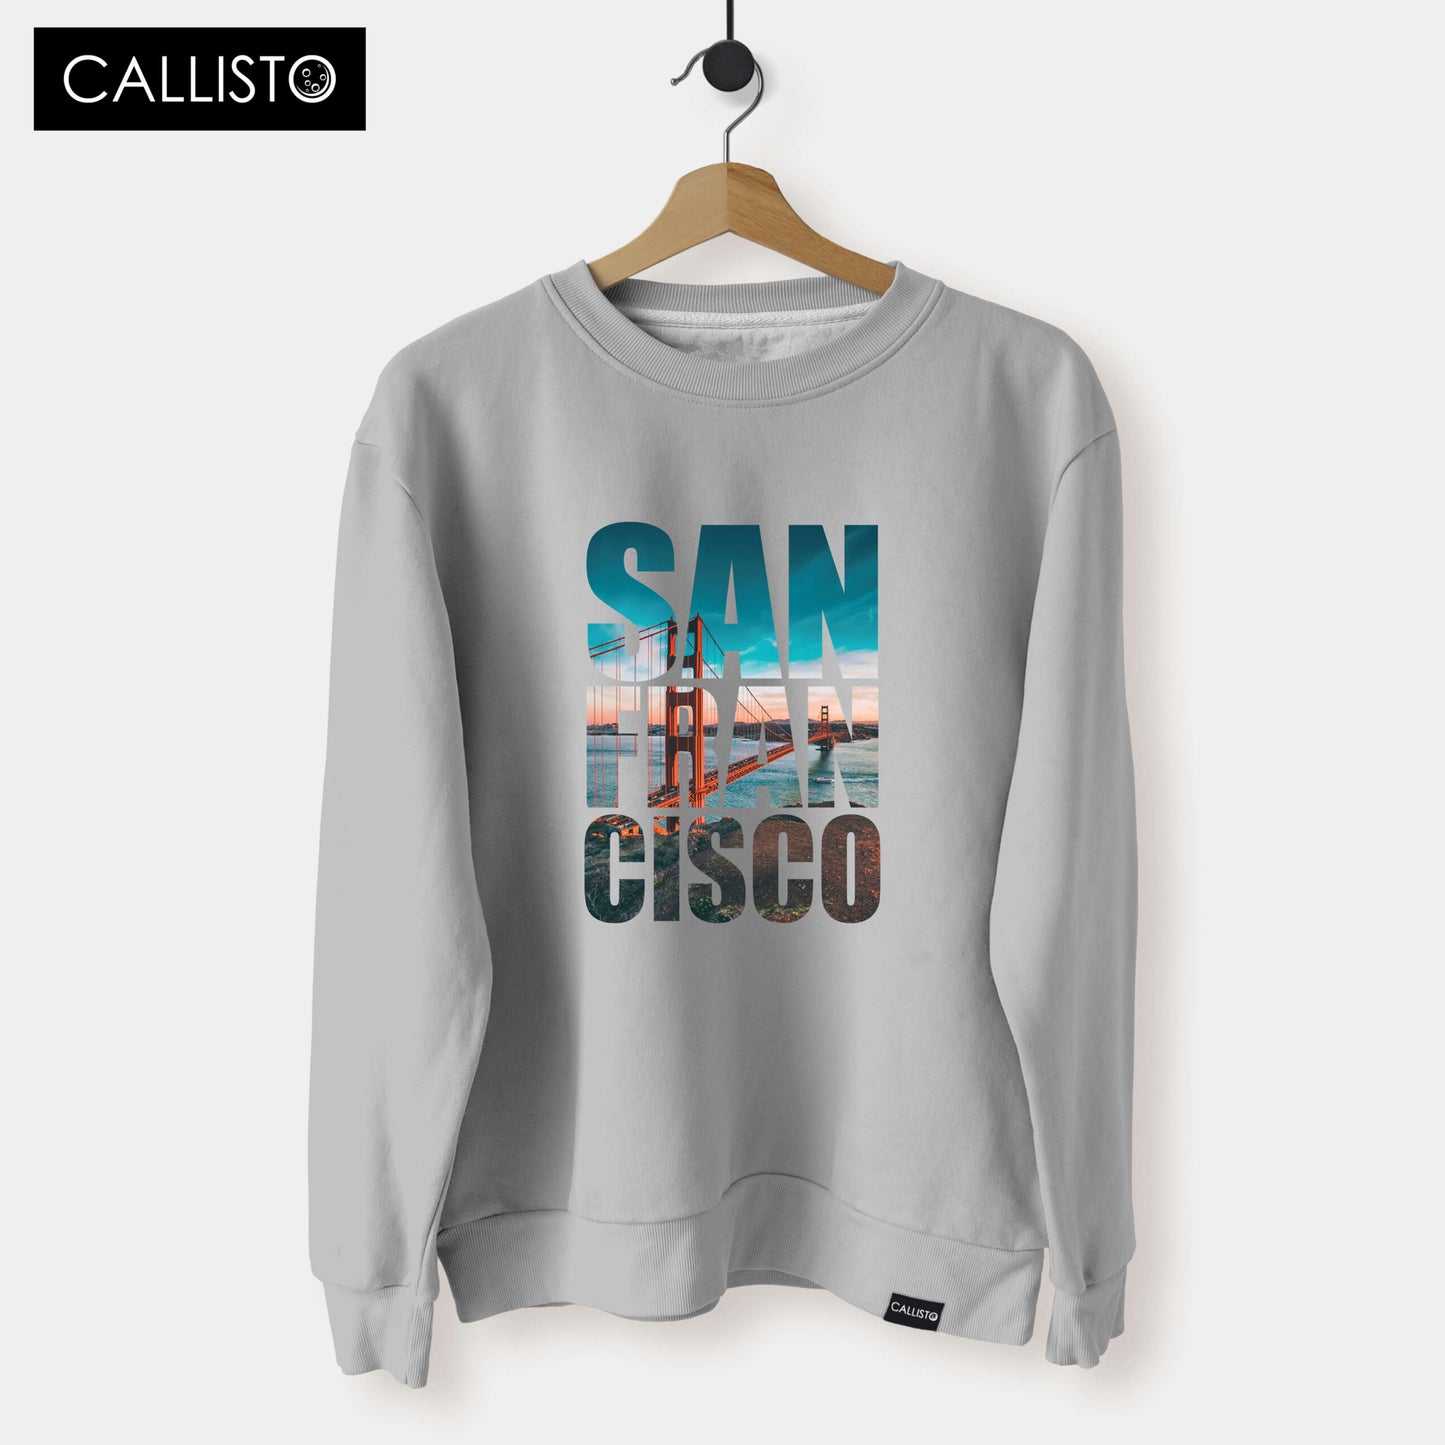 San francisco - Sweat Shirt